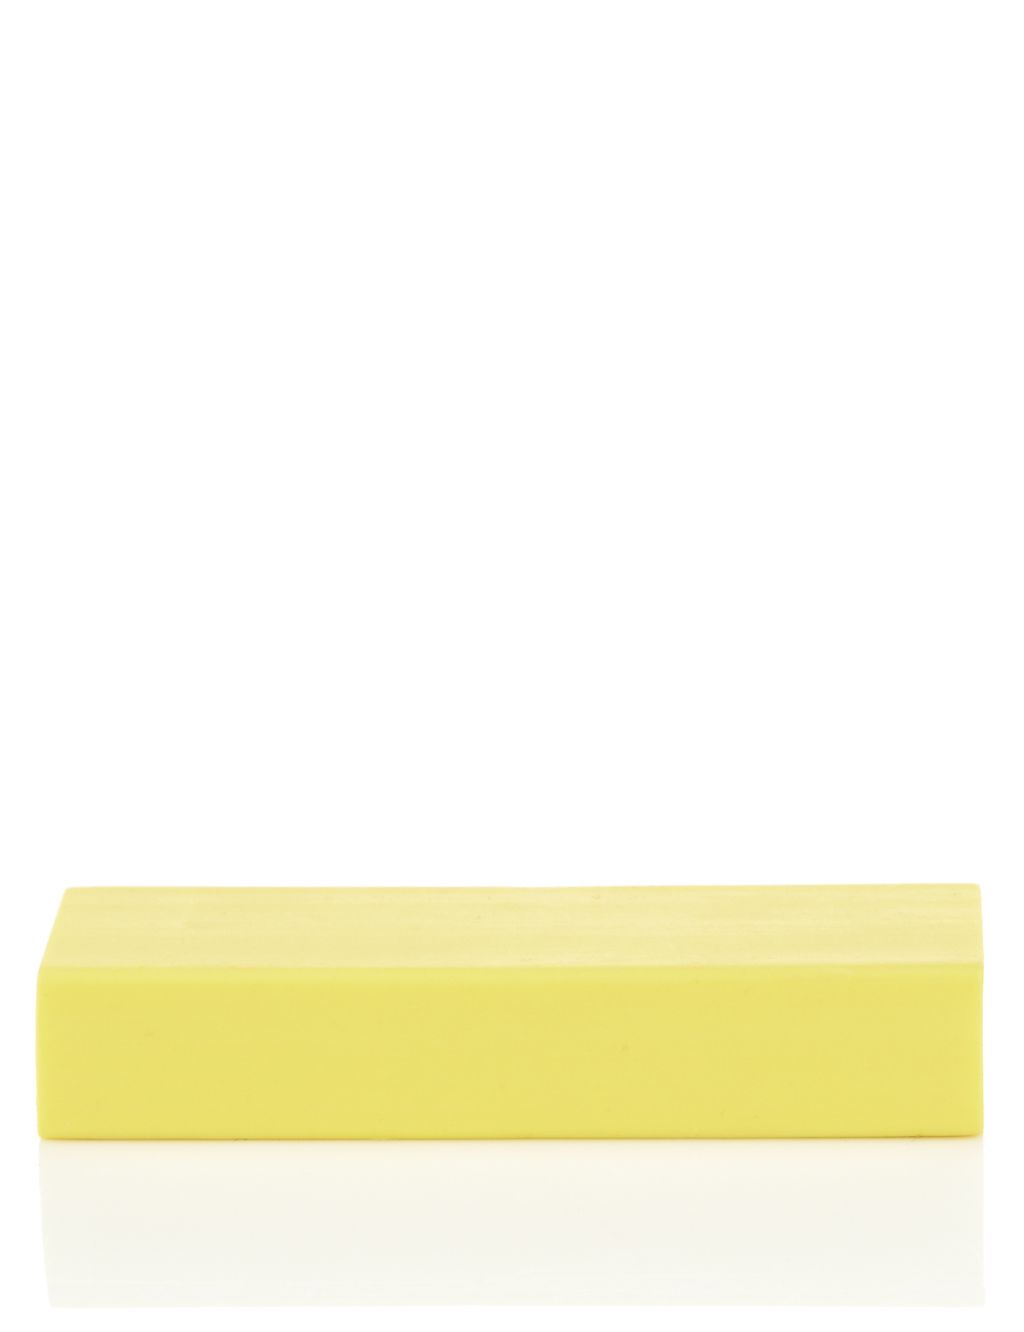 Yellow Eraser 1 of 2